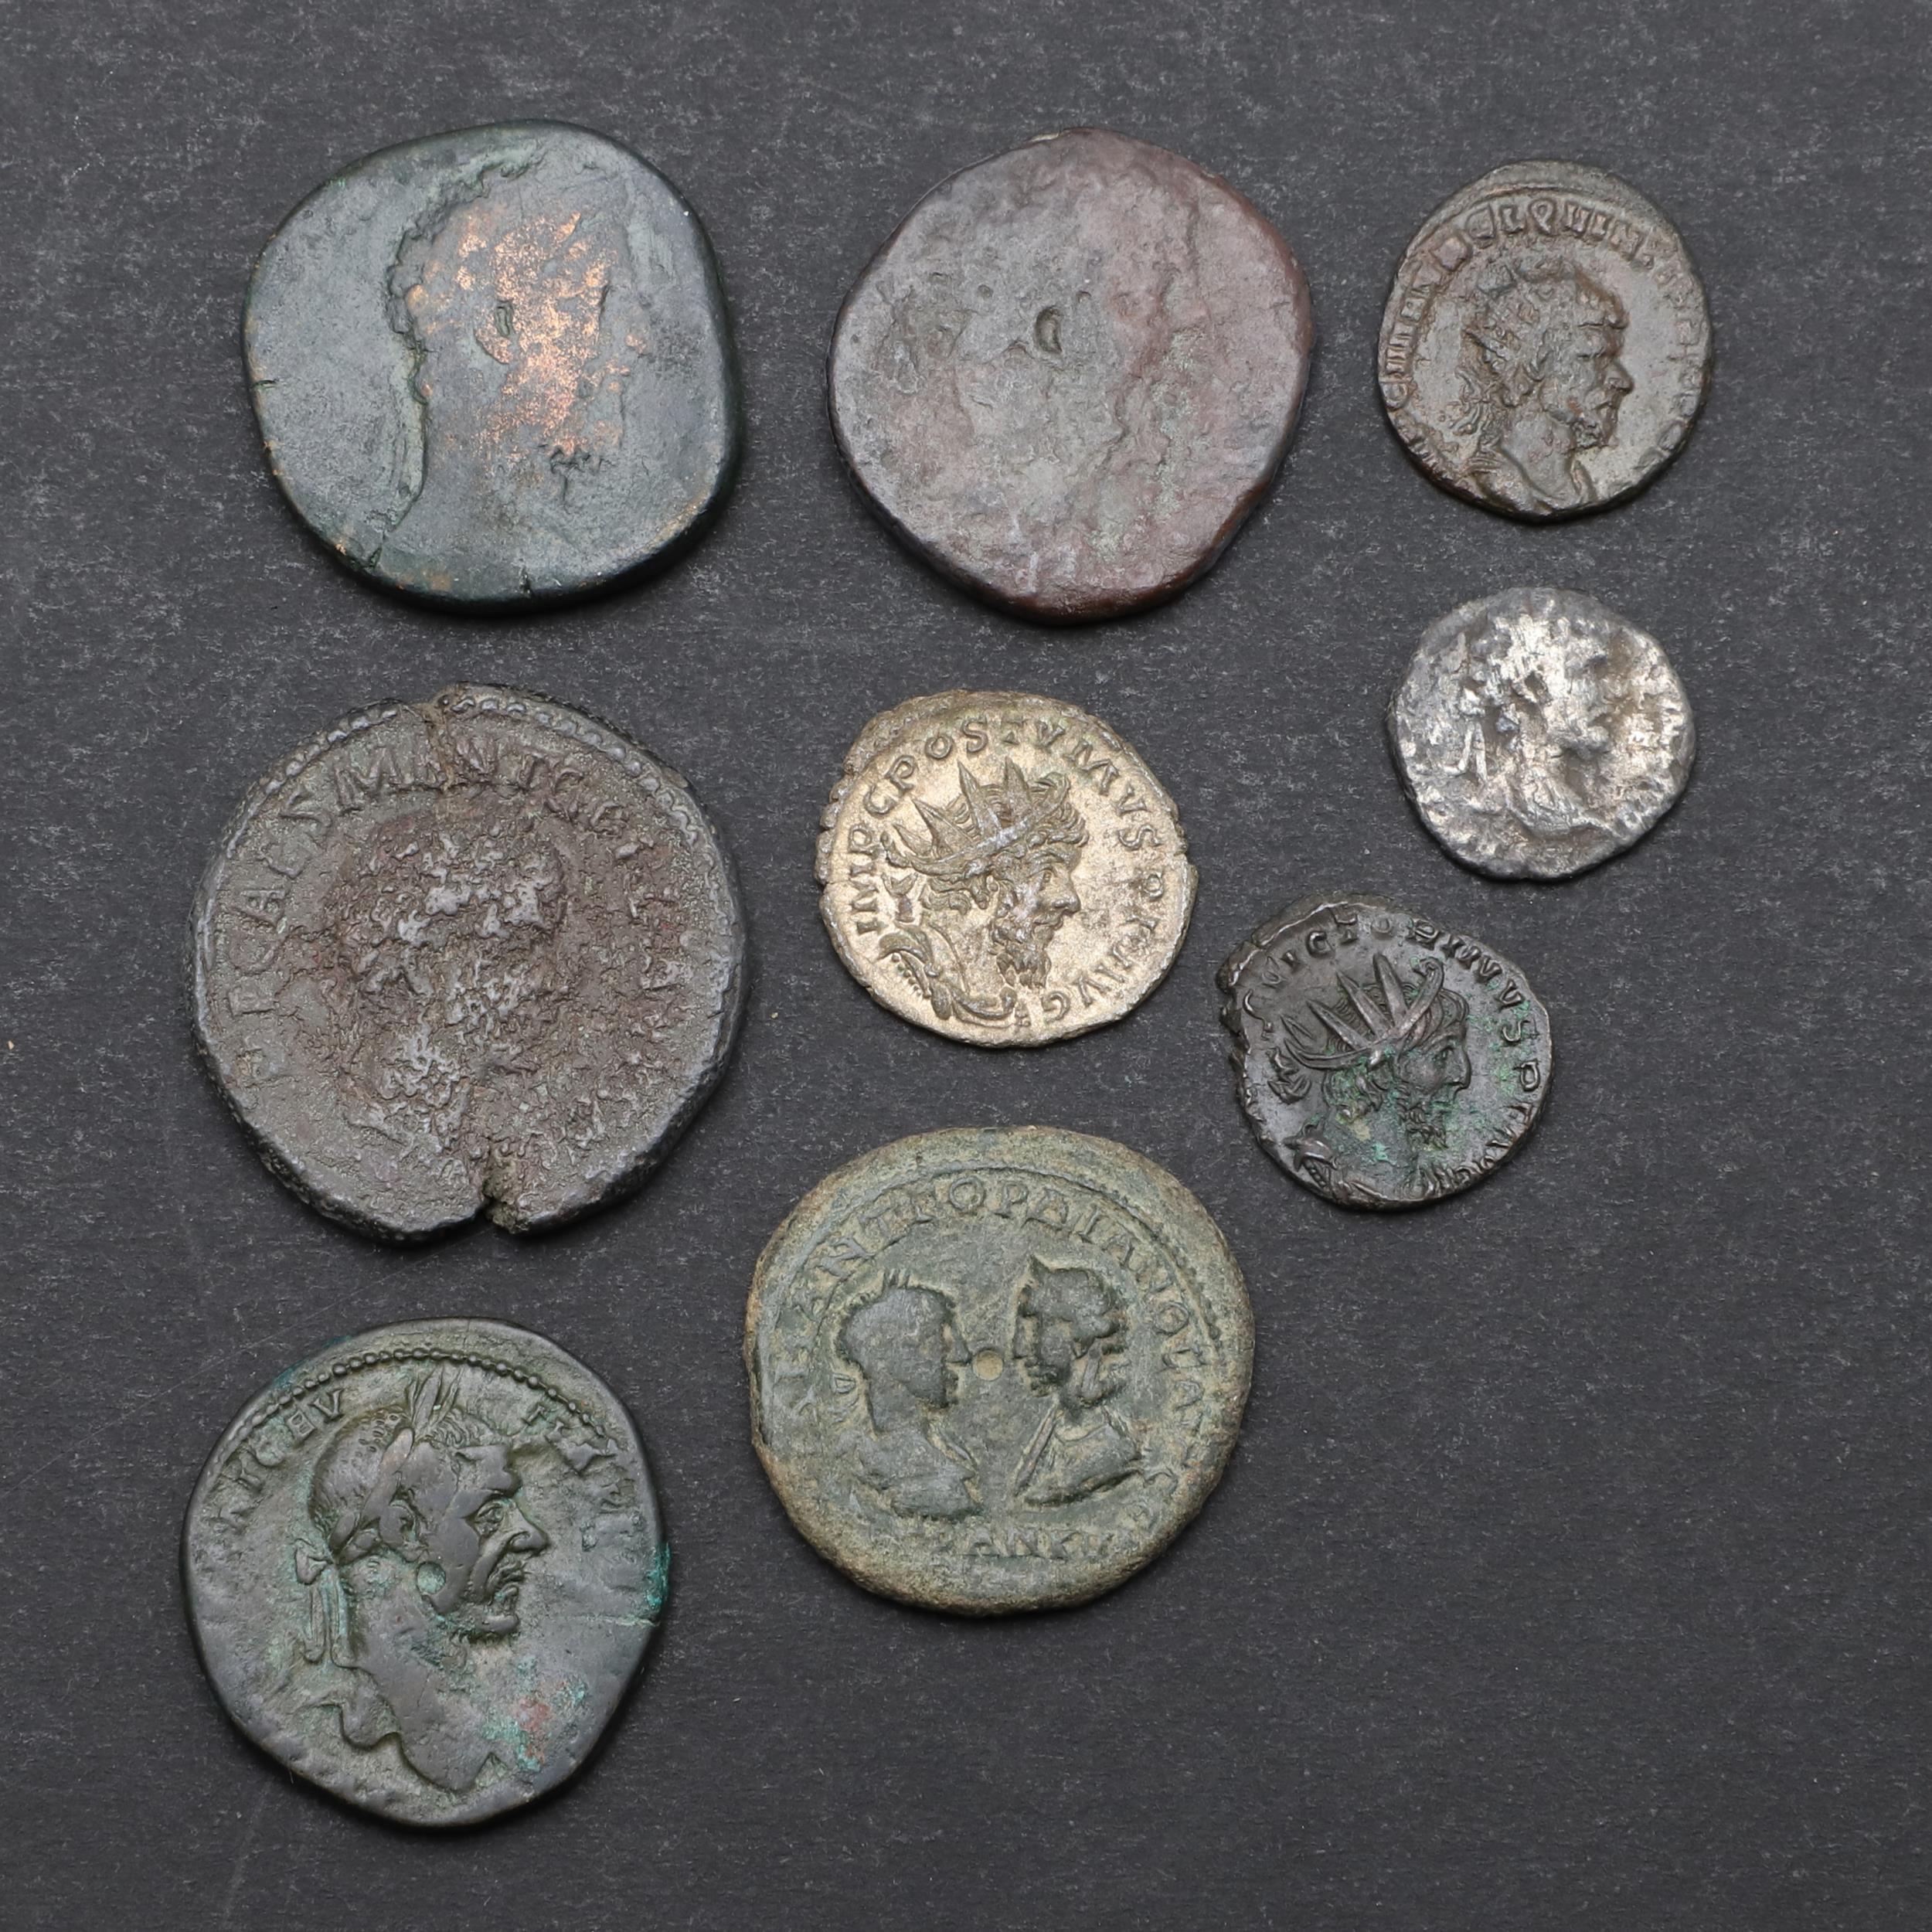 ROMAN IMPERIAL COINS: A COLLECTION OF ROMAN COINS COMMODUS - QUINTILIUS, 177-270 A.D.